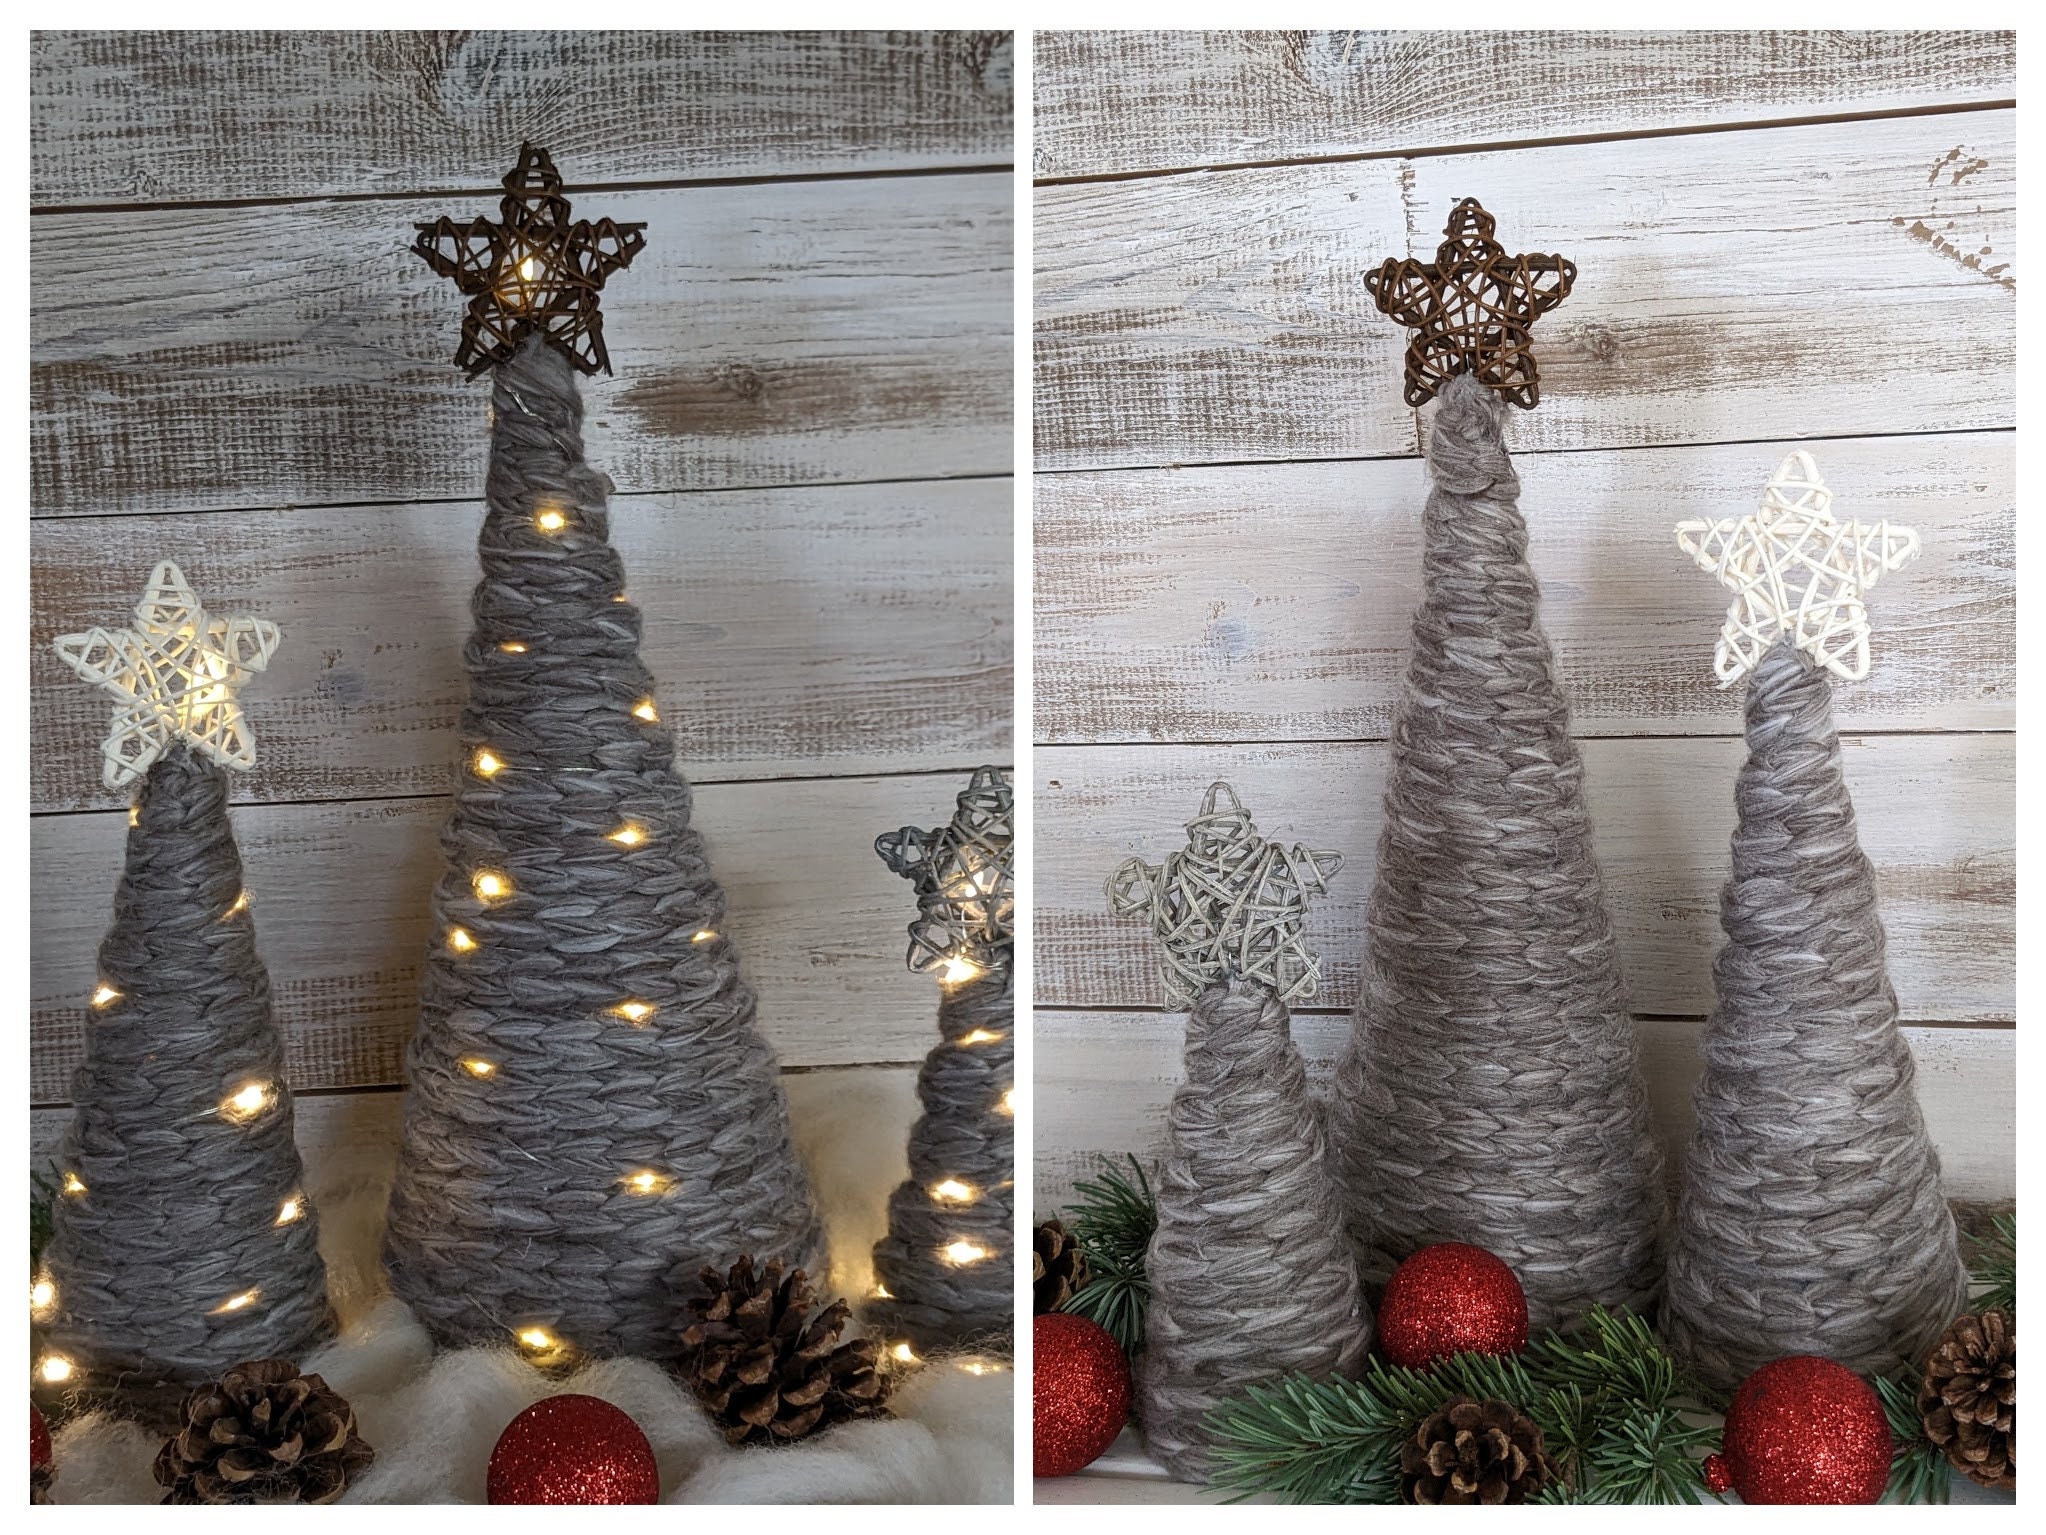 Cozy Christmas Trees with Loopity Loop Yarn - Damask Love